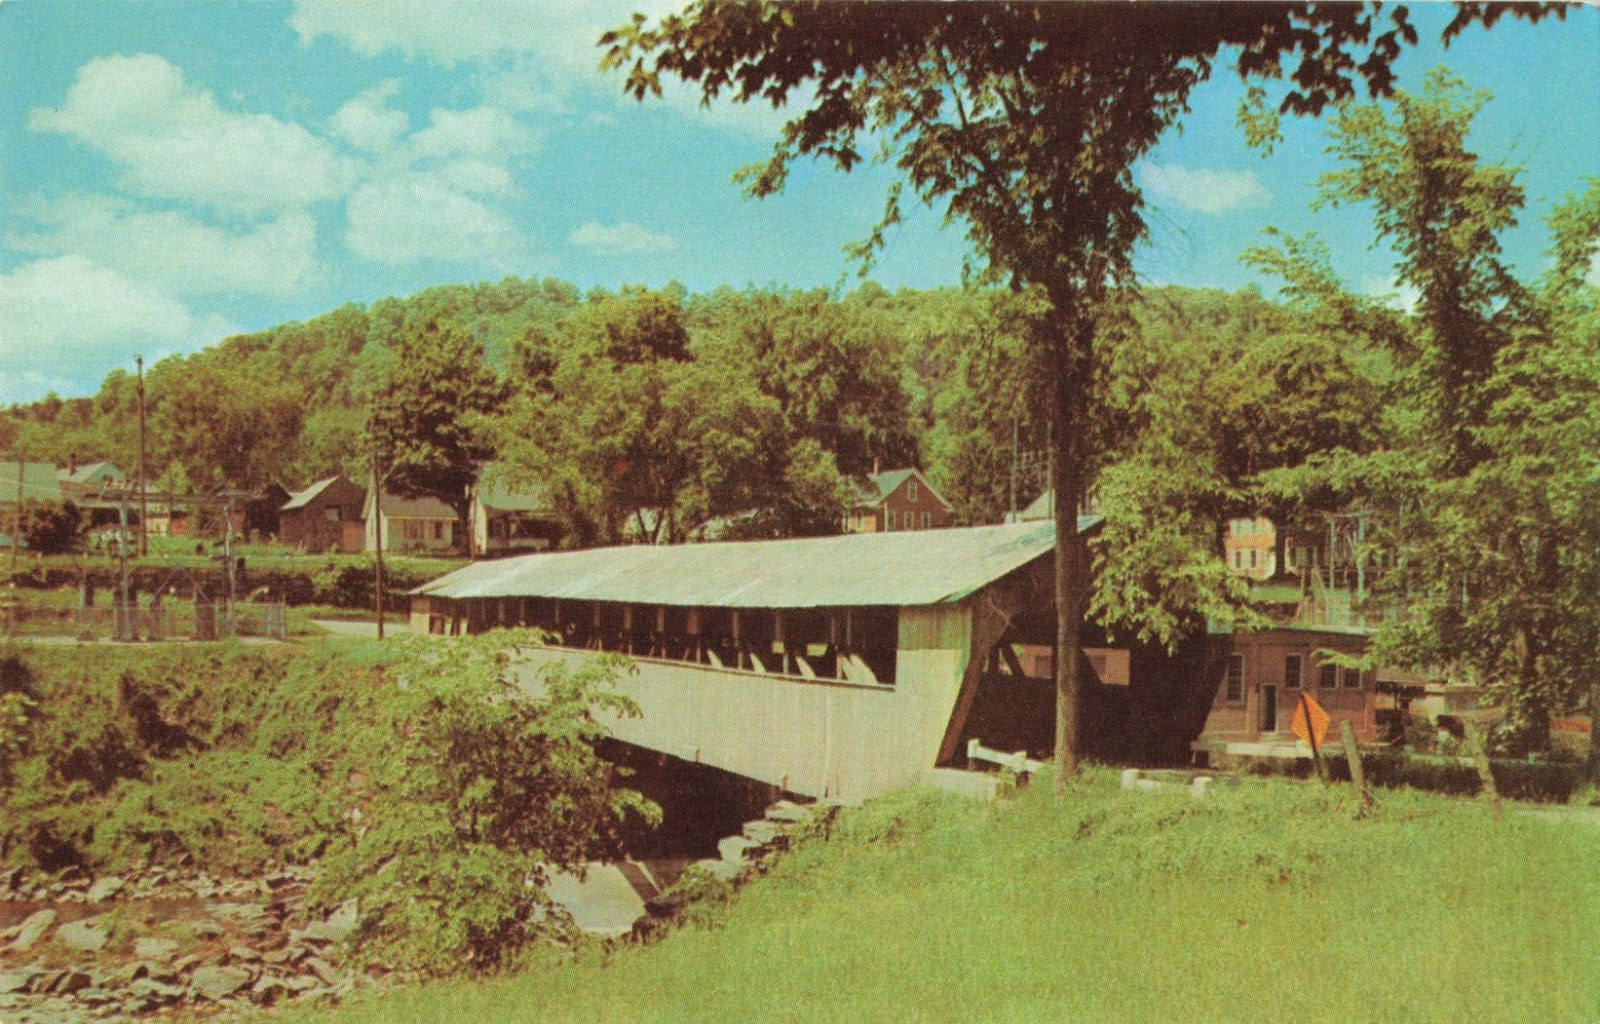 Vermont VT, Taftsville Covered Bridge, Ottauquechee River, Vintage Postcard